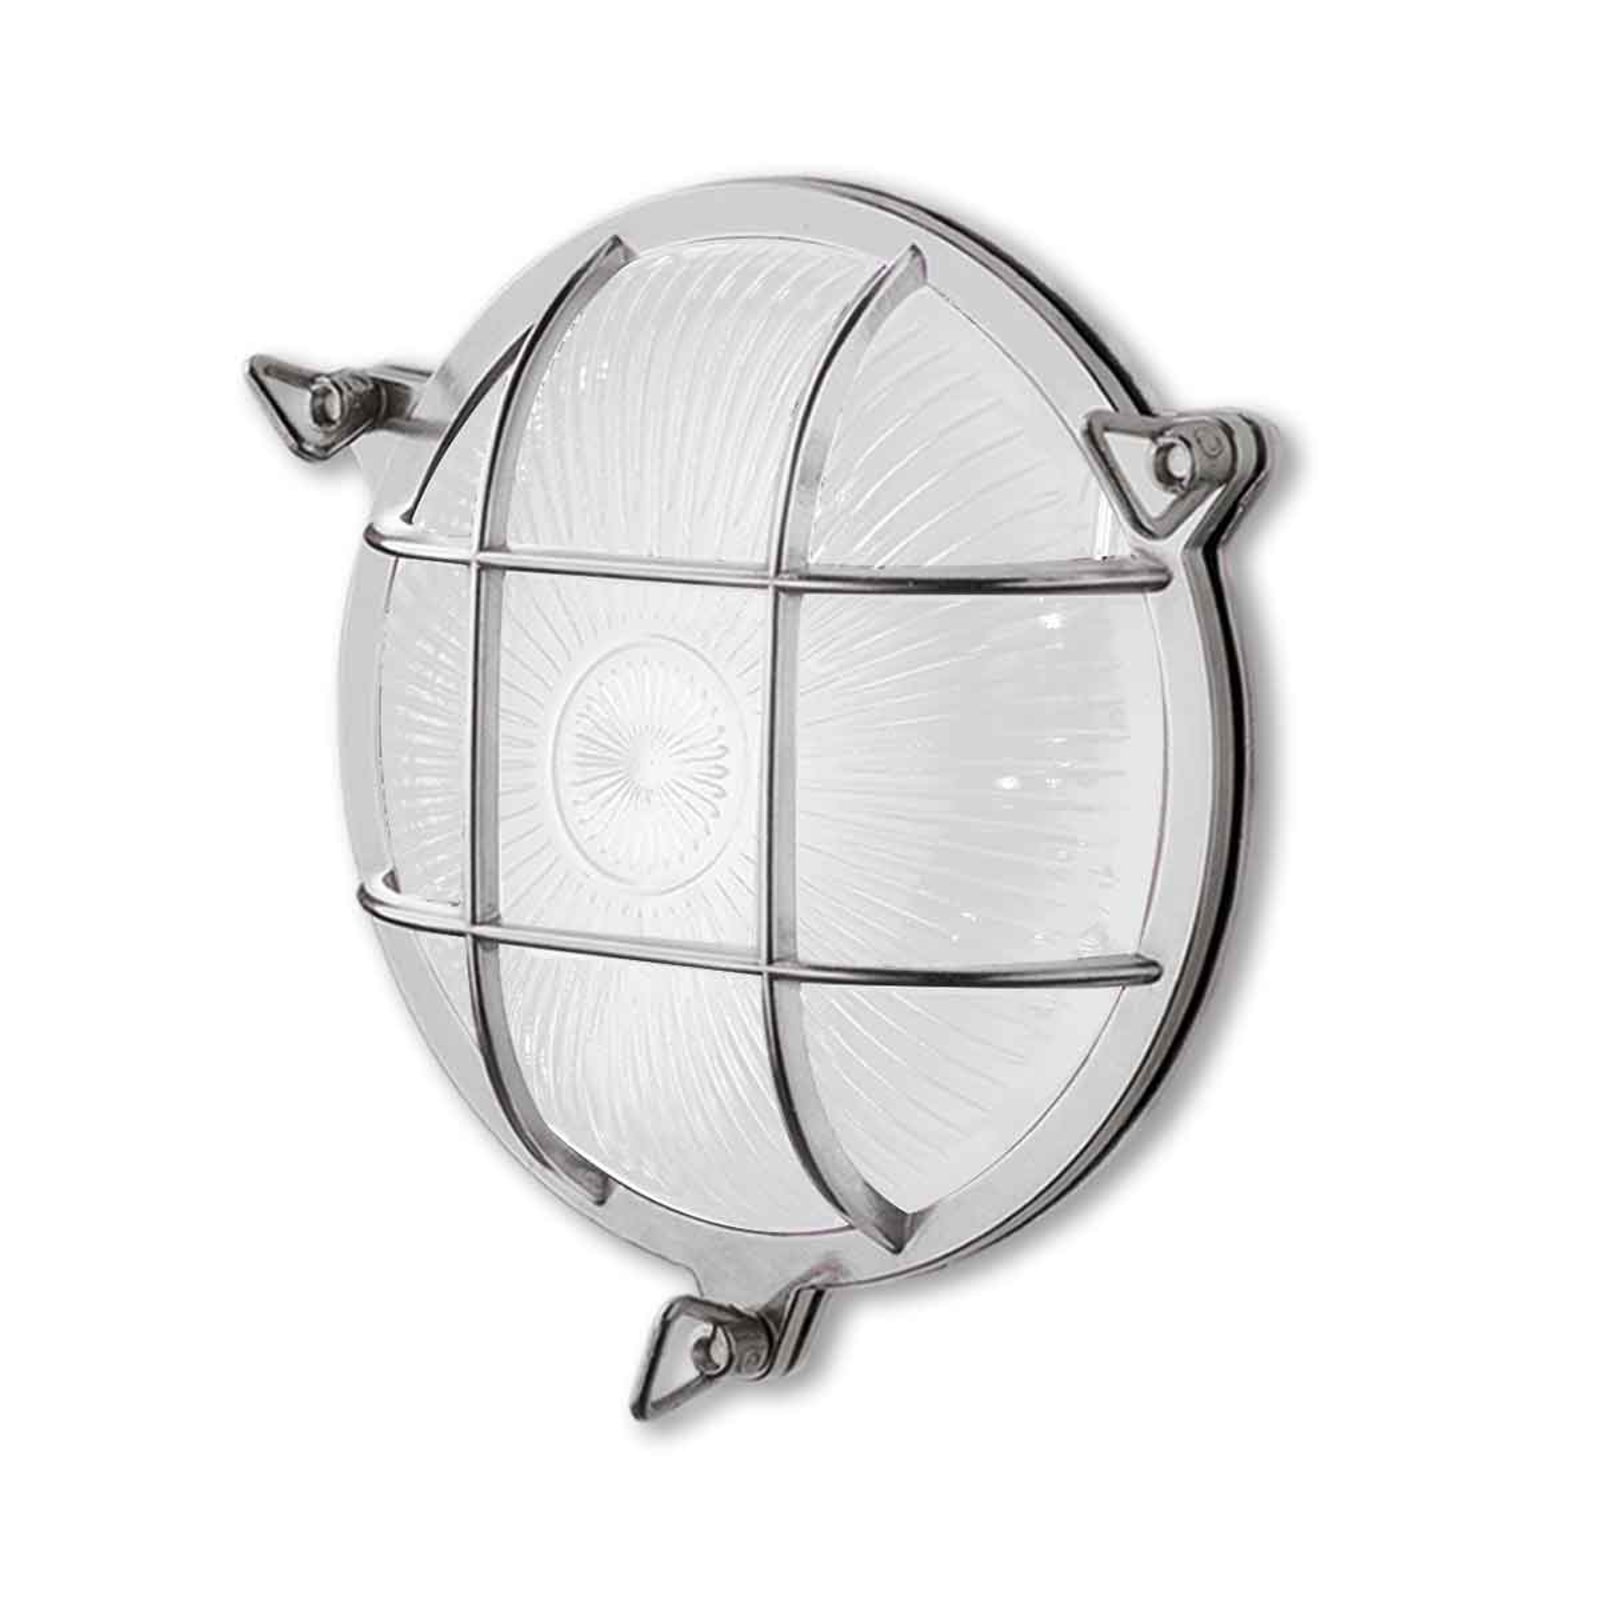 Tortuga 200.20 wall lamp, round, nickel/opal